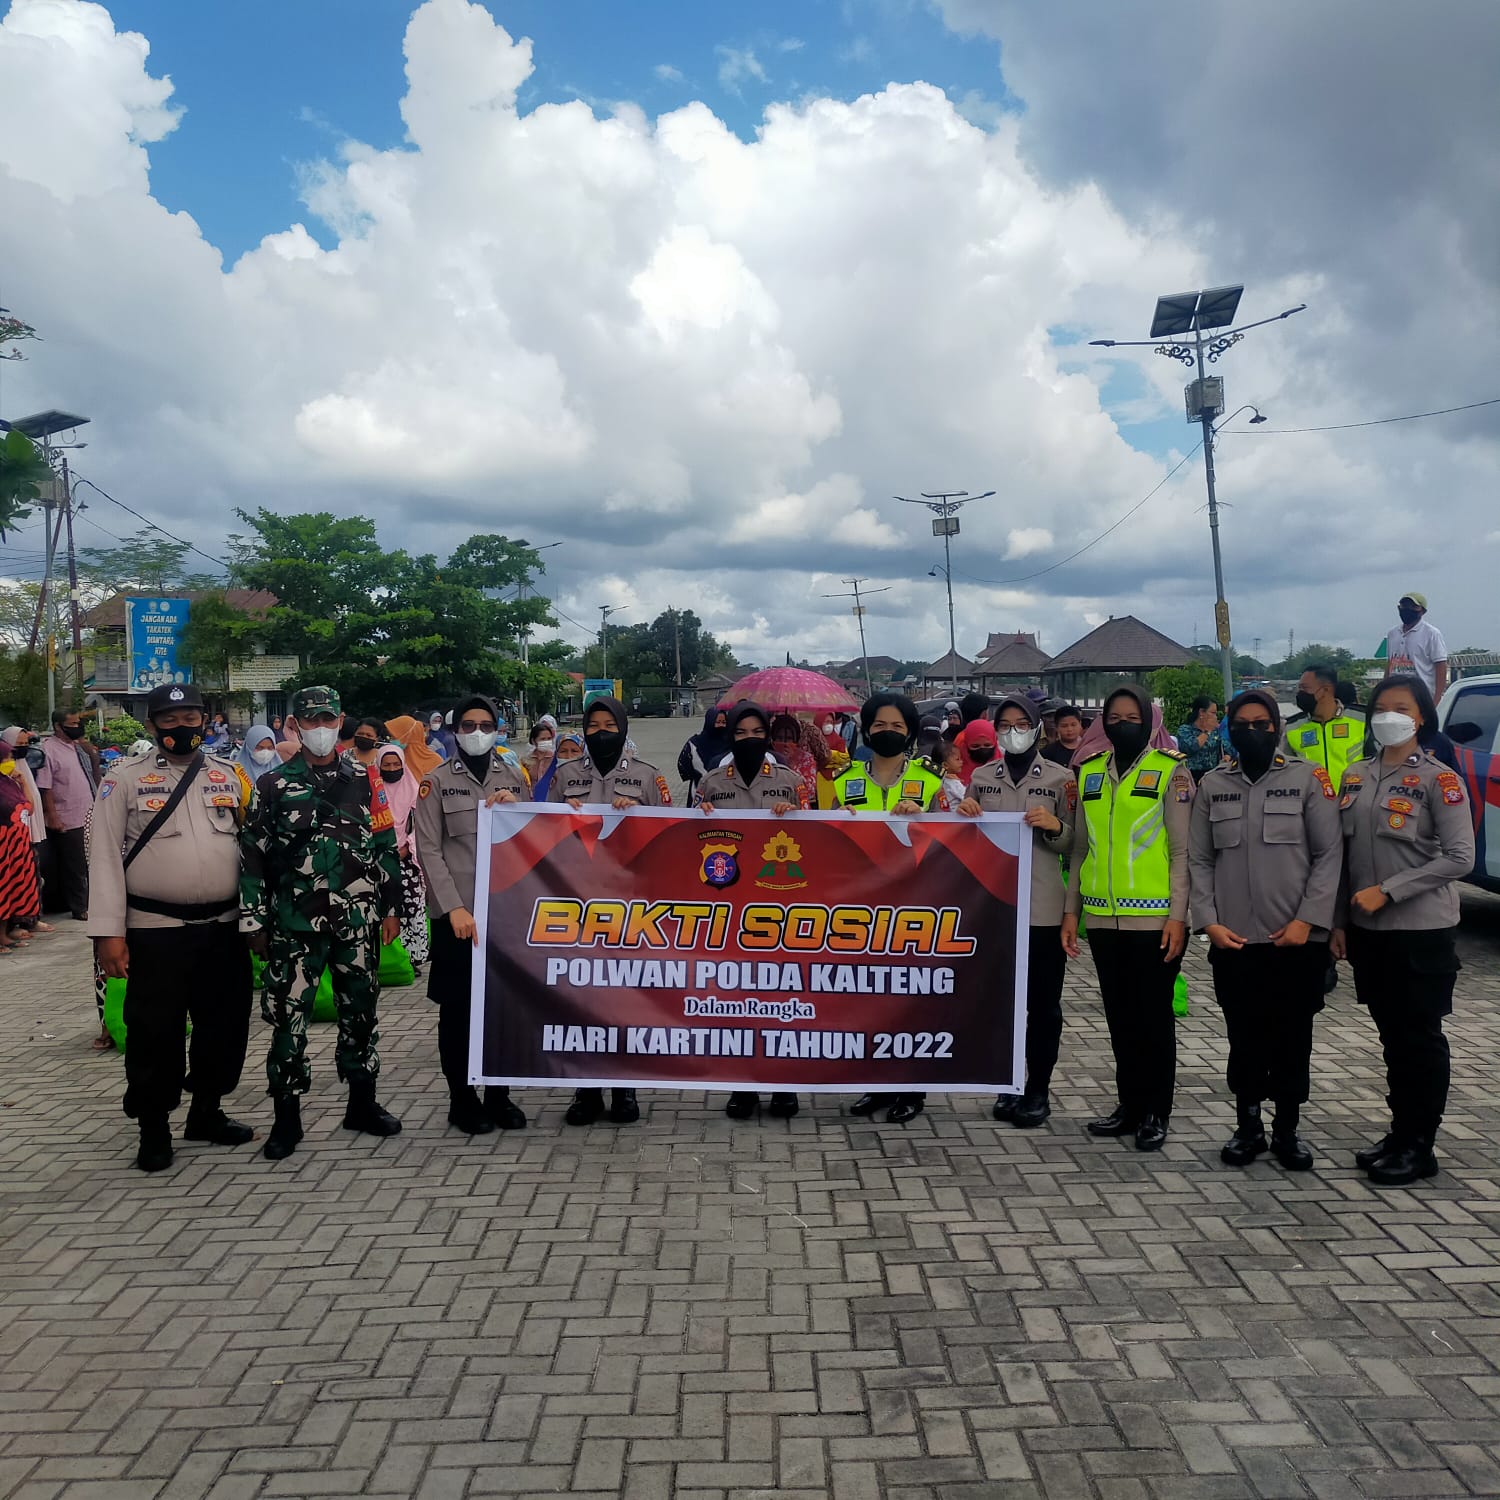 Peringati Hari Kartini, Polwan Polda Kalteng Bagikan 150 Paket Sembako